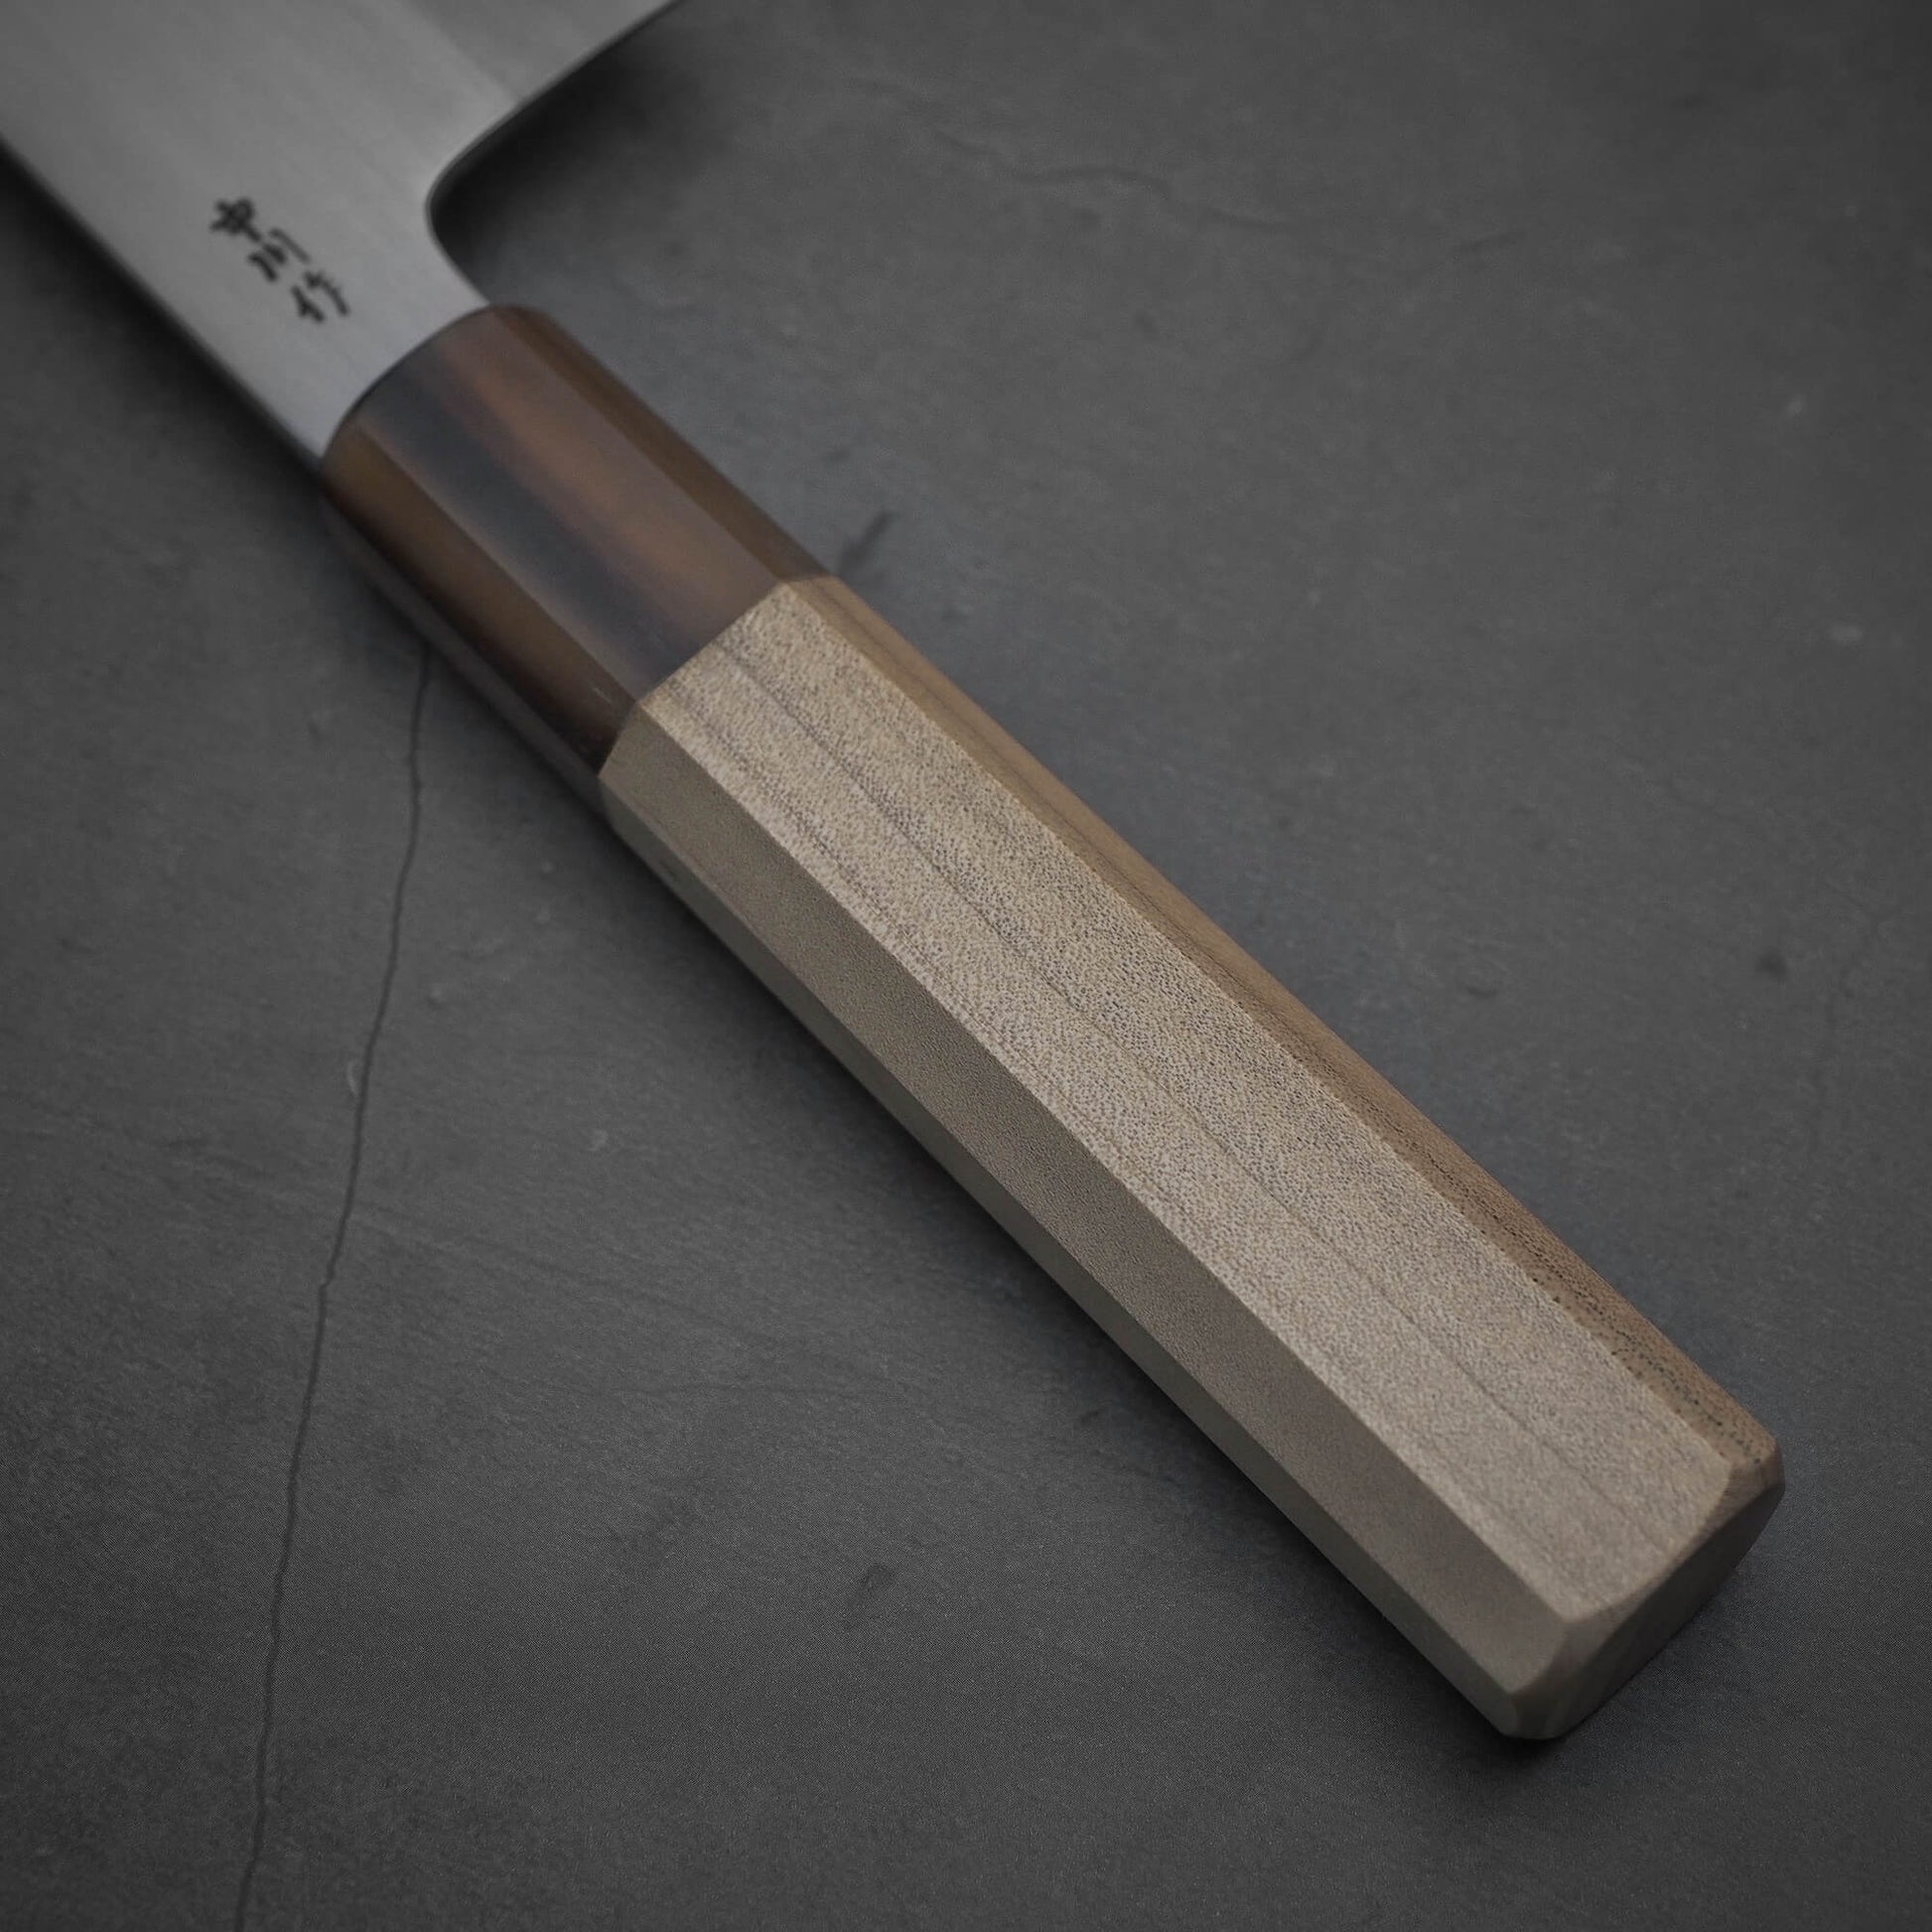 Close up view of the handle of Nakagawa shinogi aogami#2 nakiri knife